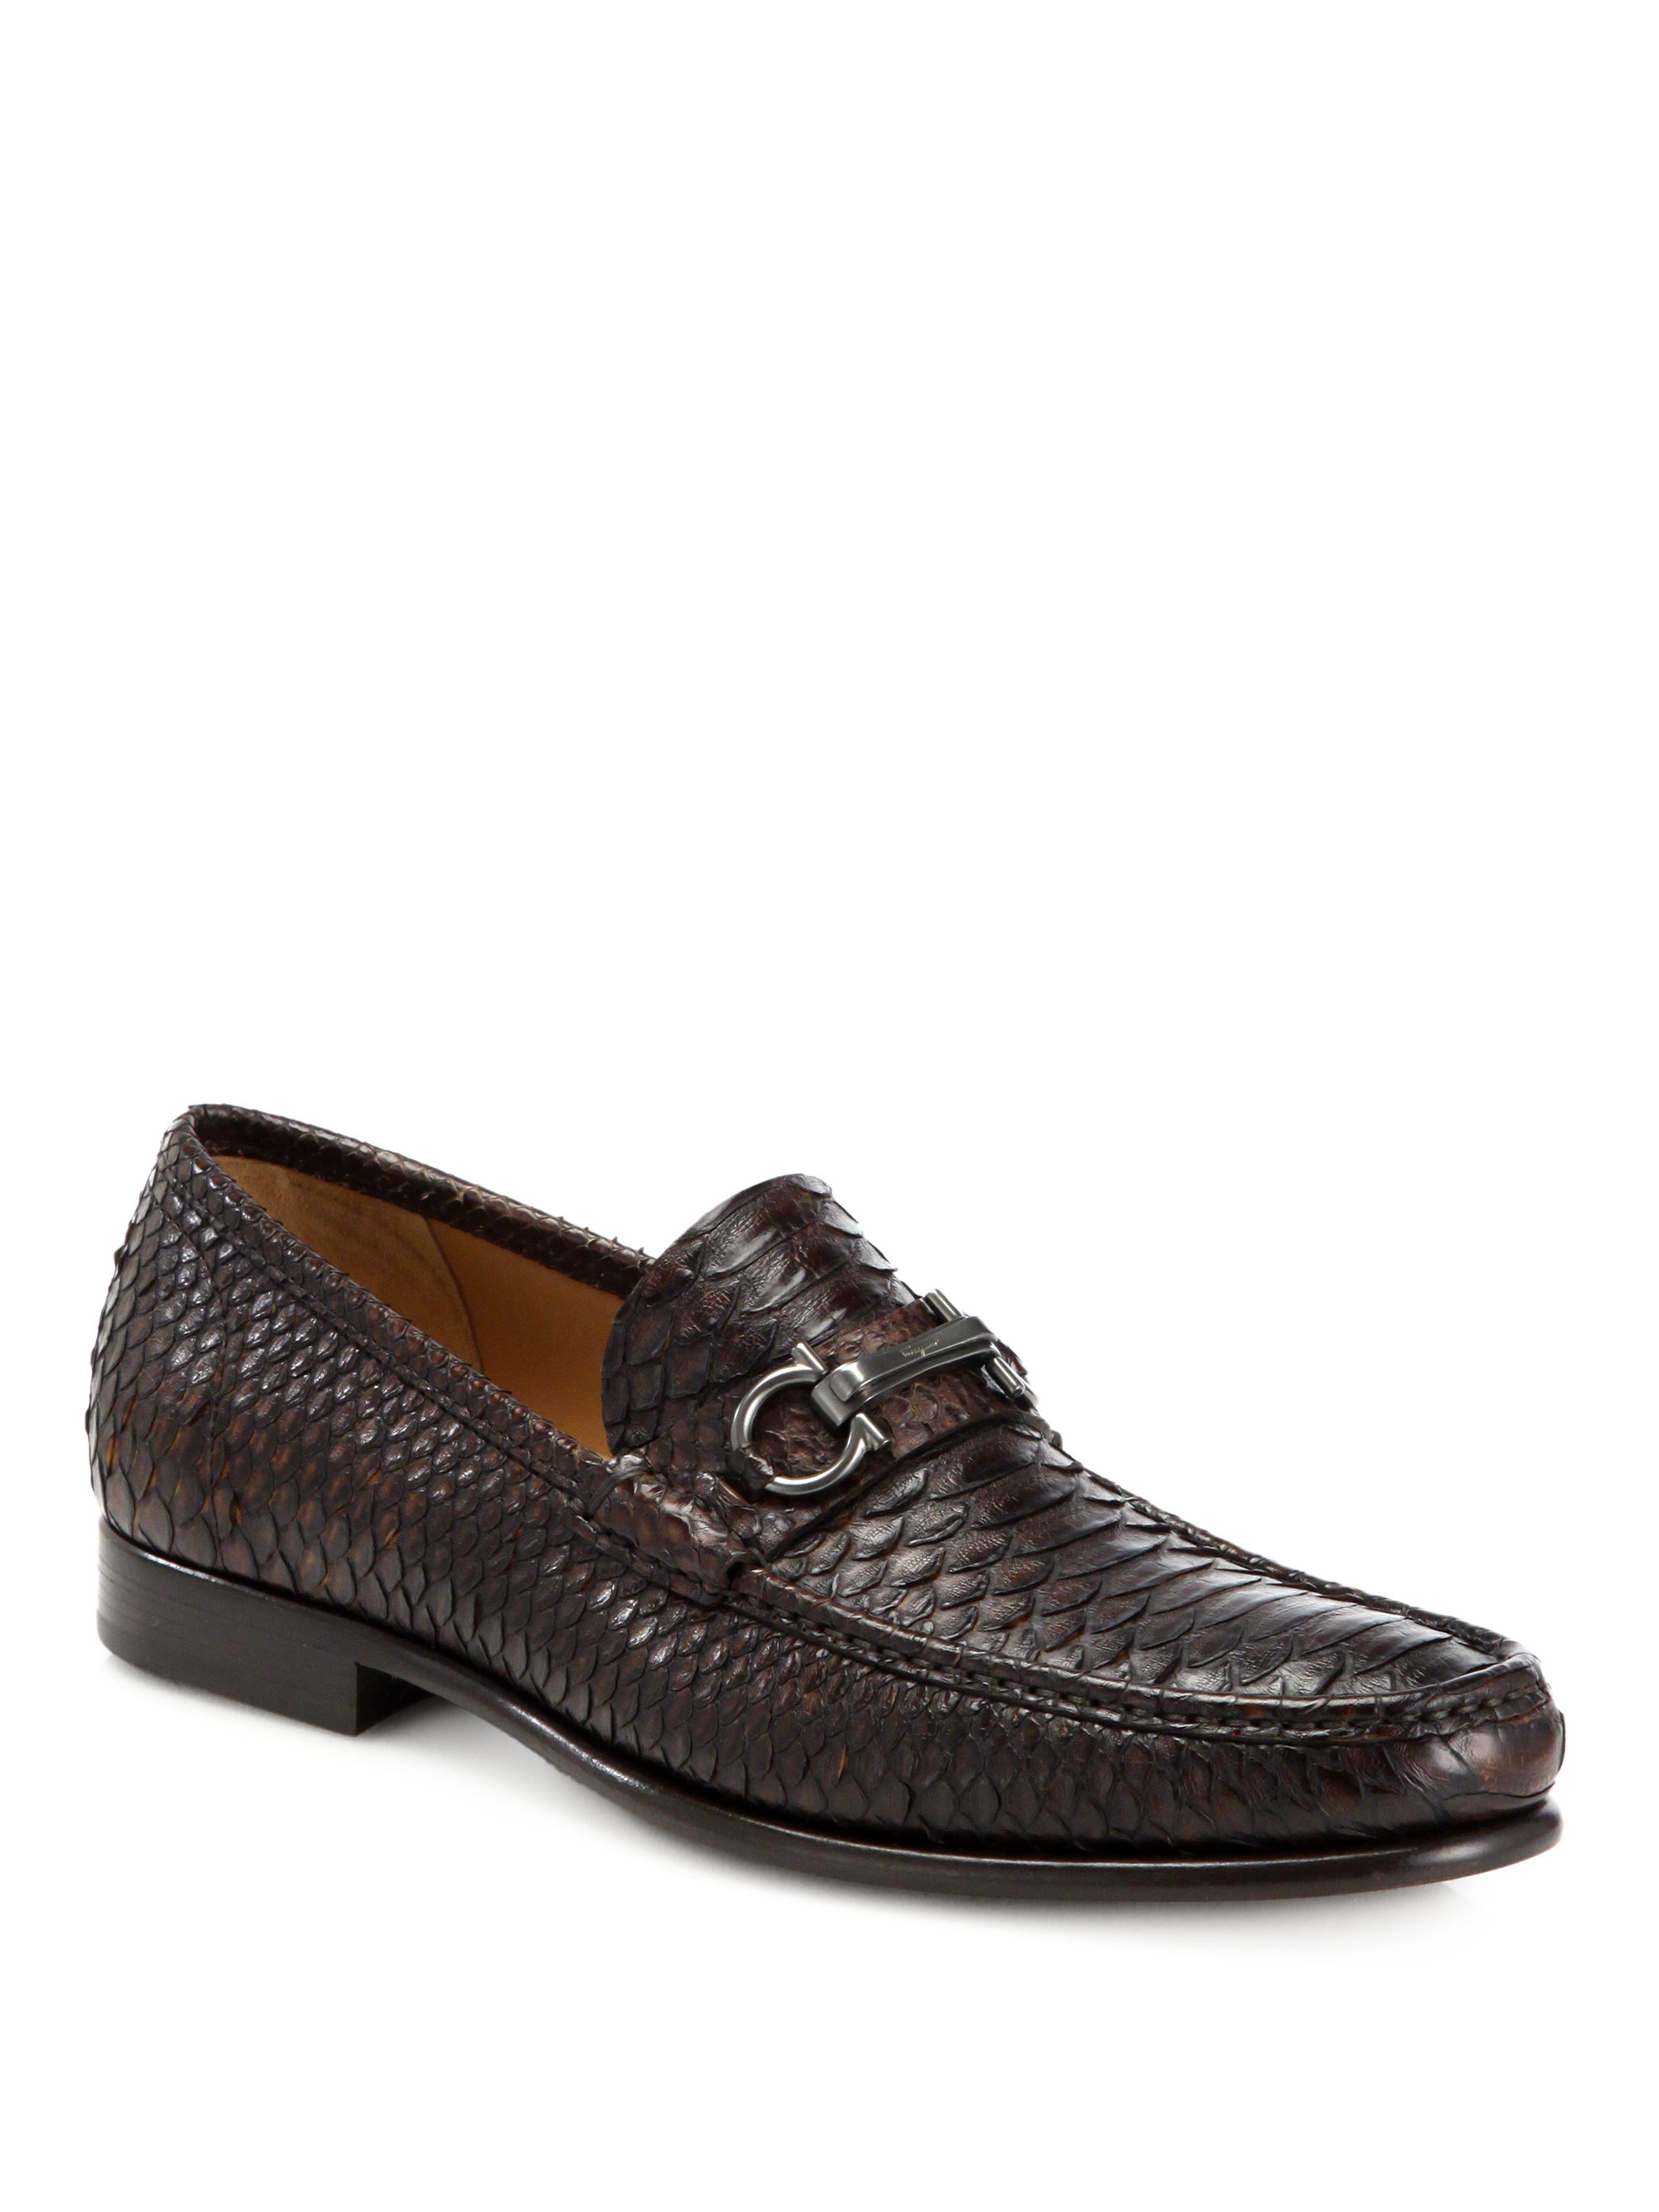 Ferragamo Rafaele Python Slip-On Loafers in Brown for Men | Lyst